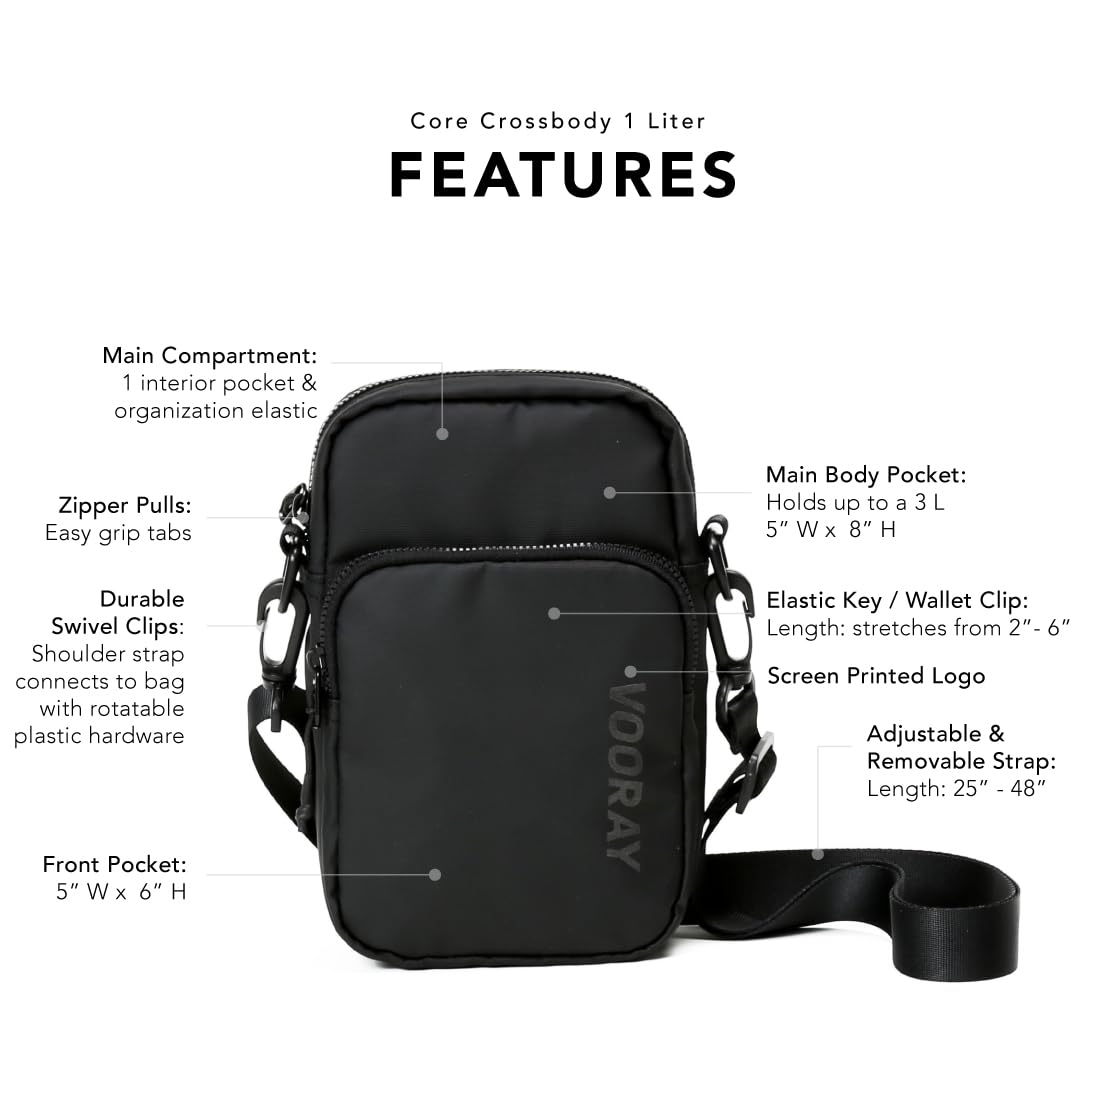 VOORAY 1L Lightweight Core Crossbody Bag – Small Lightweight Travel Bag, Small Gym Bag for Women and Men with Adjustable Belt, Overnight Bag, Everyday Bag, Hospital Bag